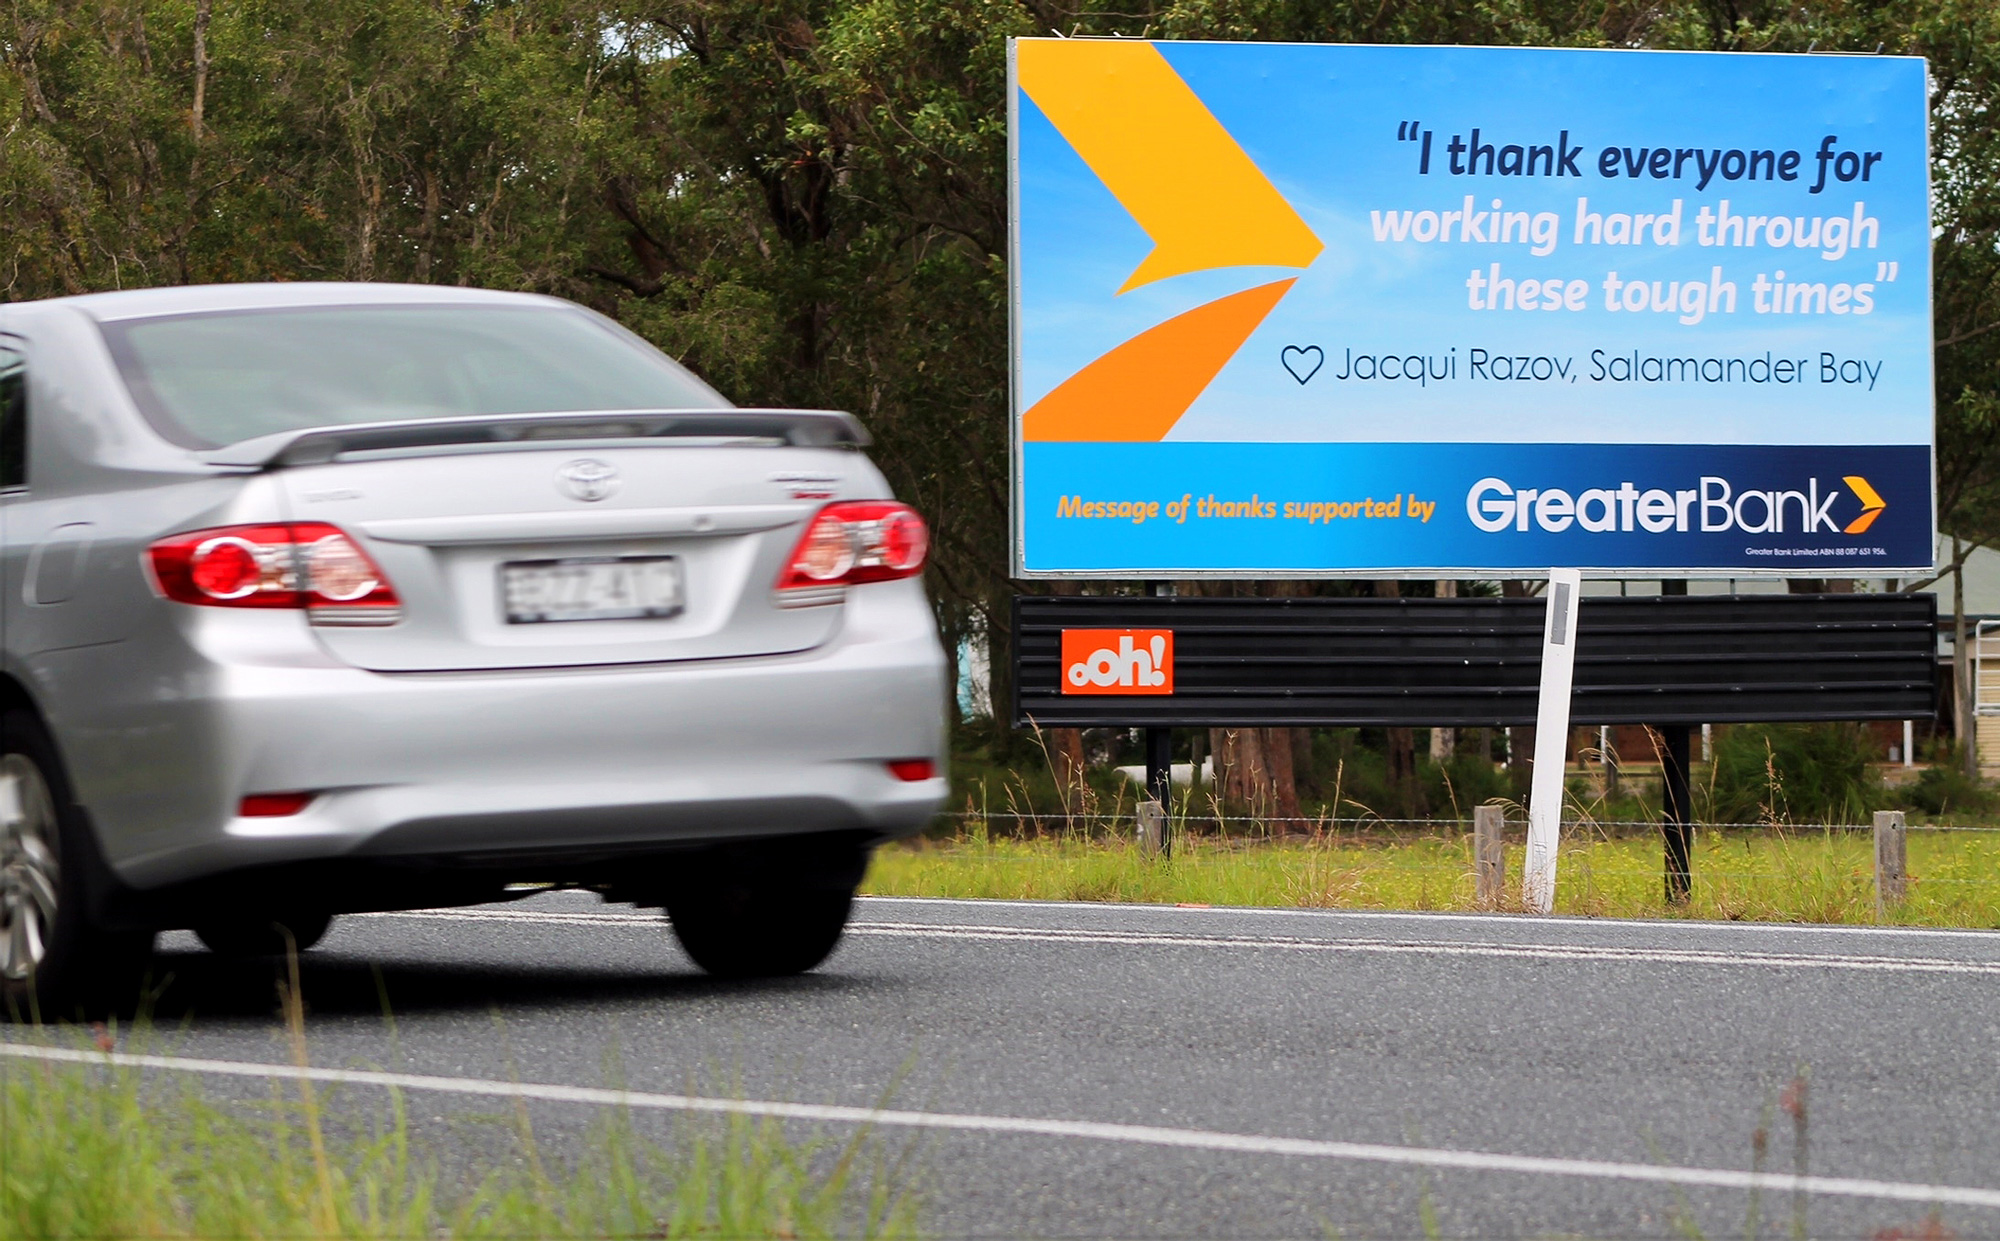 Greater Bank road advertising on billboard